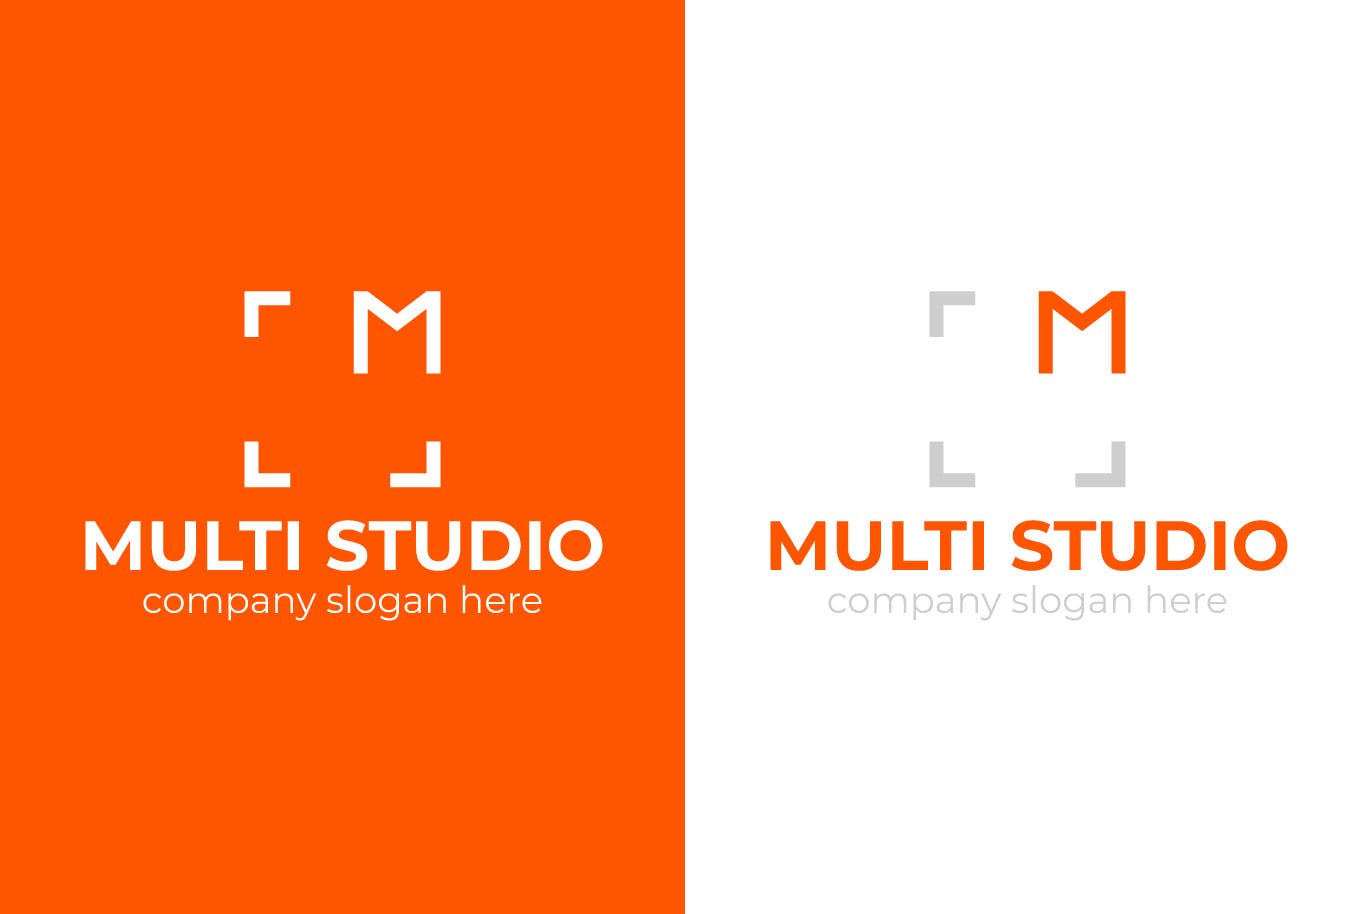 字母M创意图形企业品牌Logo设计16图库精选模板 Letter Based Business Logo Template插图(1)